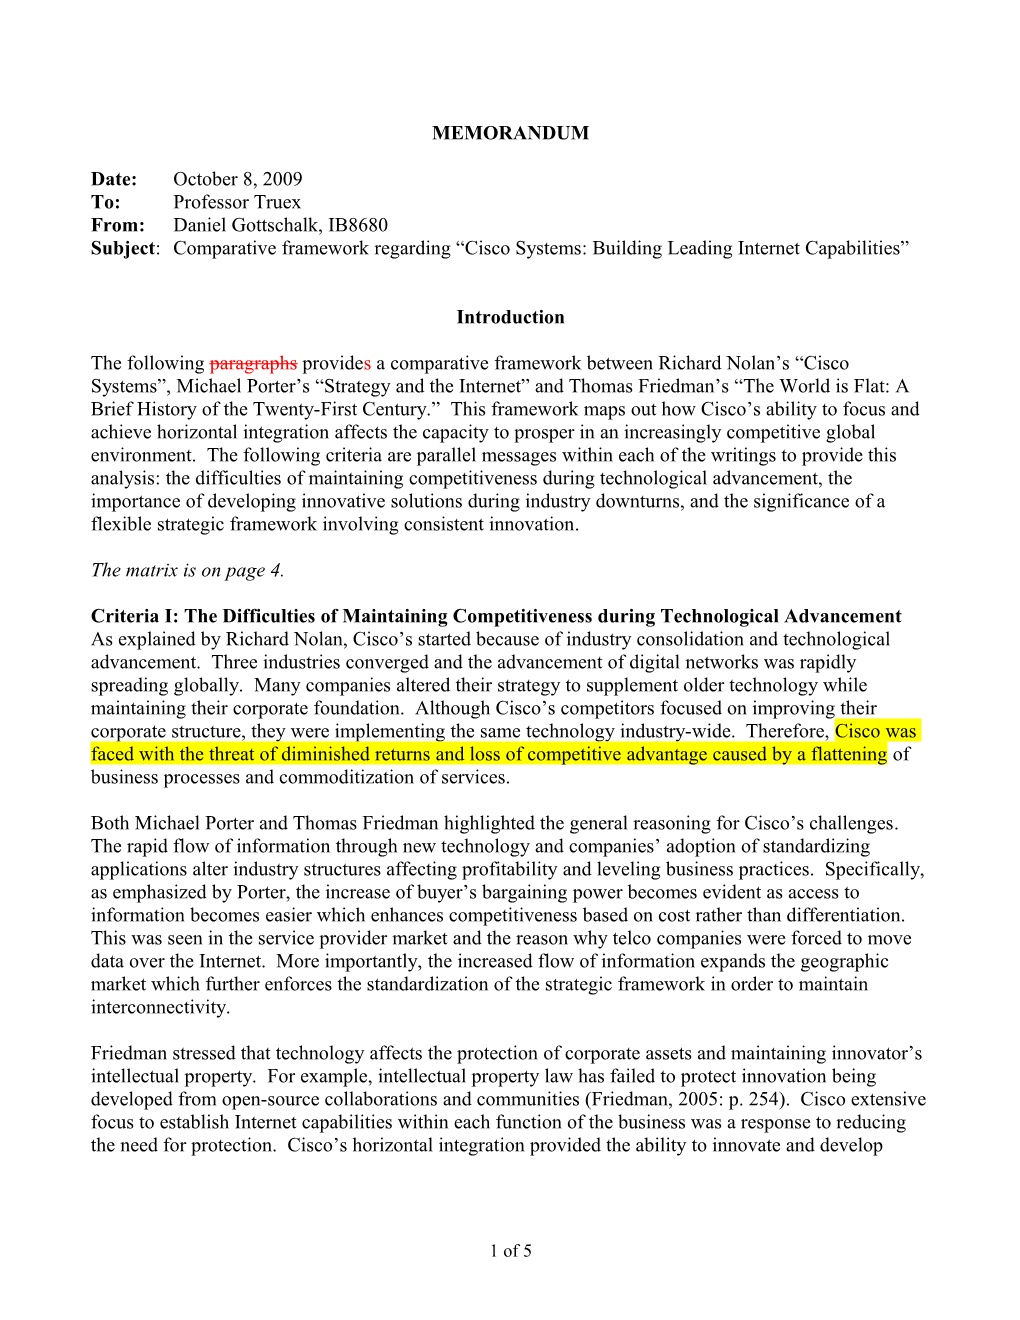 Subject: Comparative Framework Regarding Cisco Systems: Building Leading Internet Capabilities